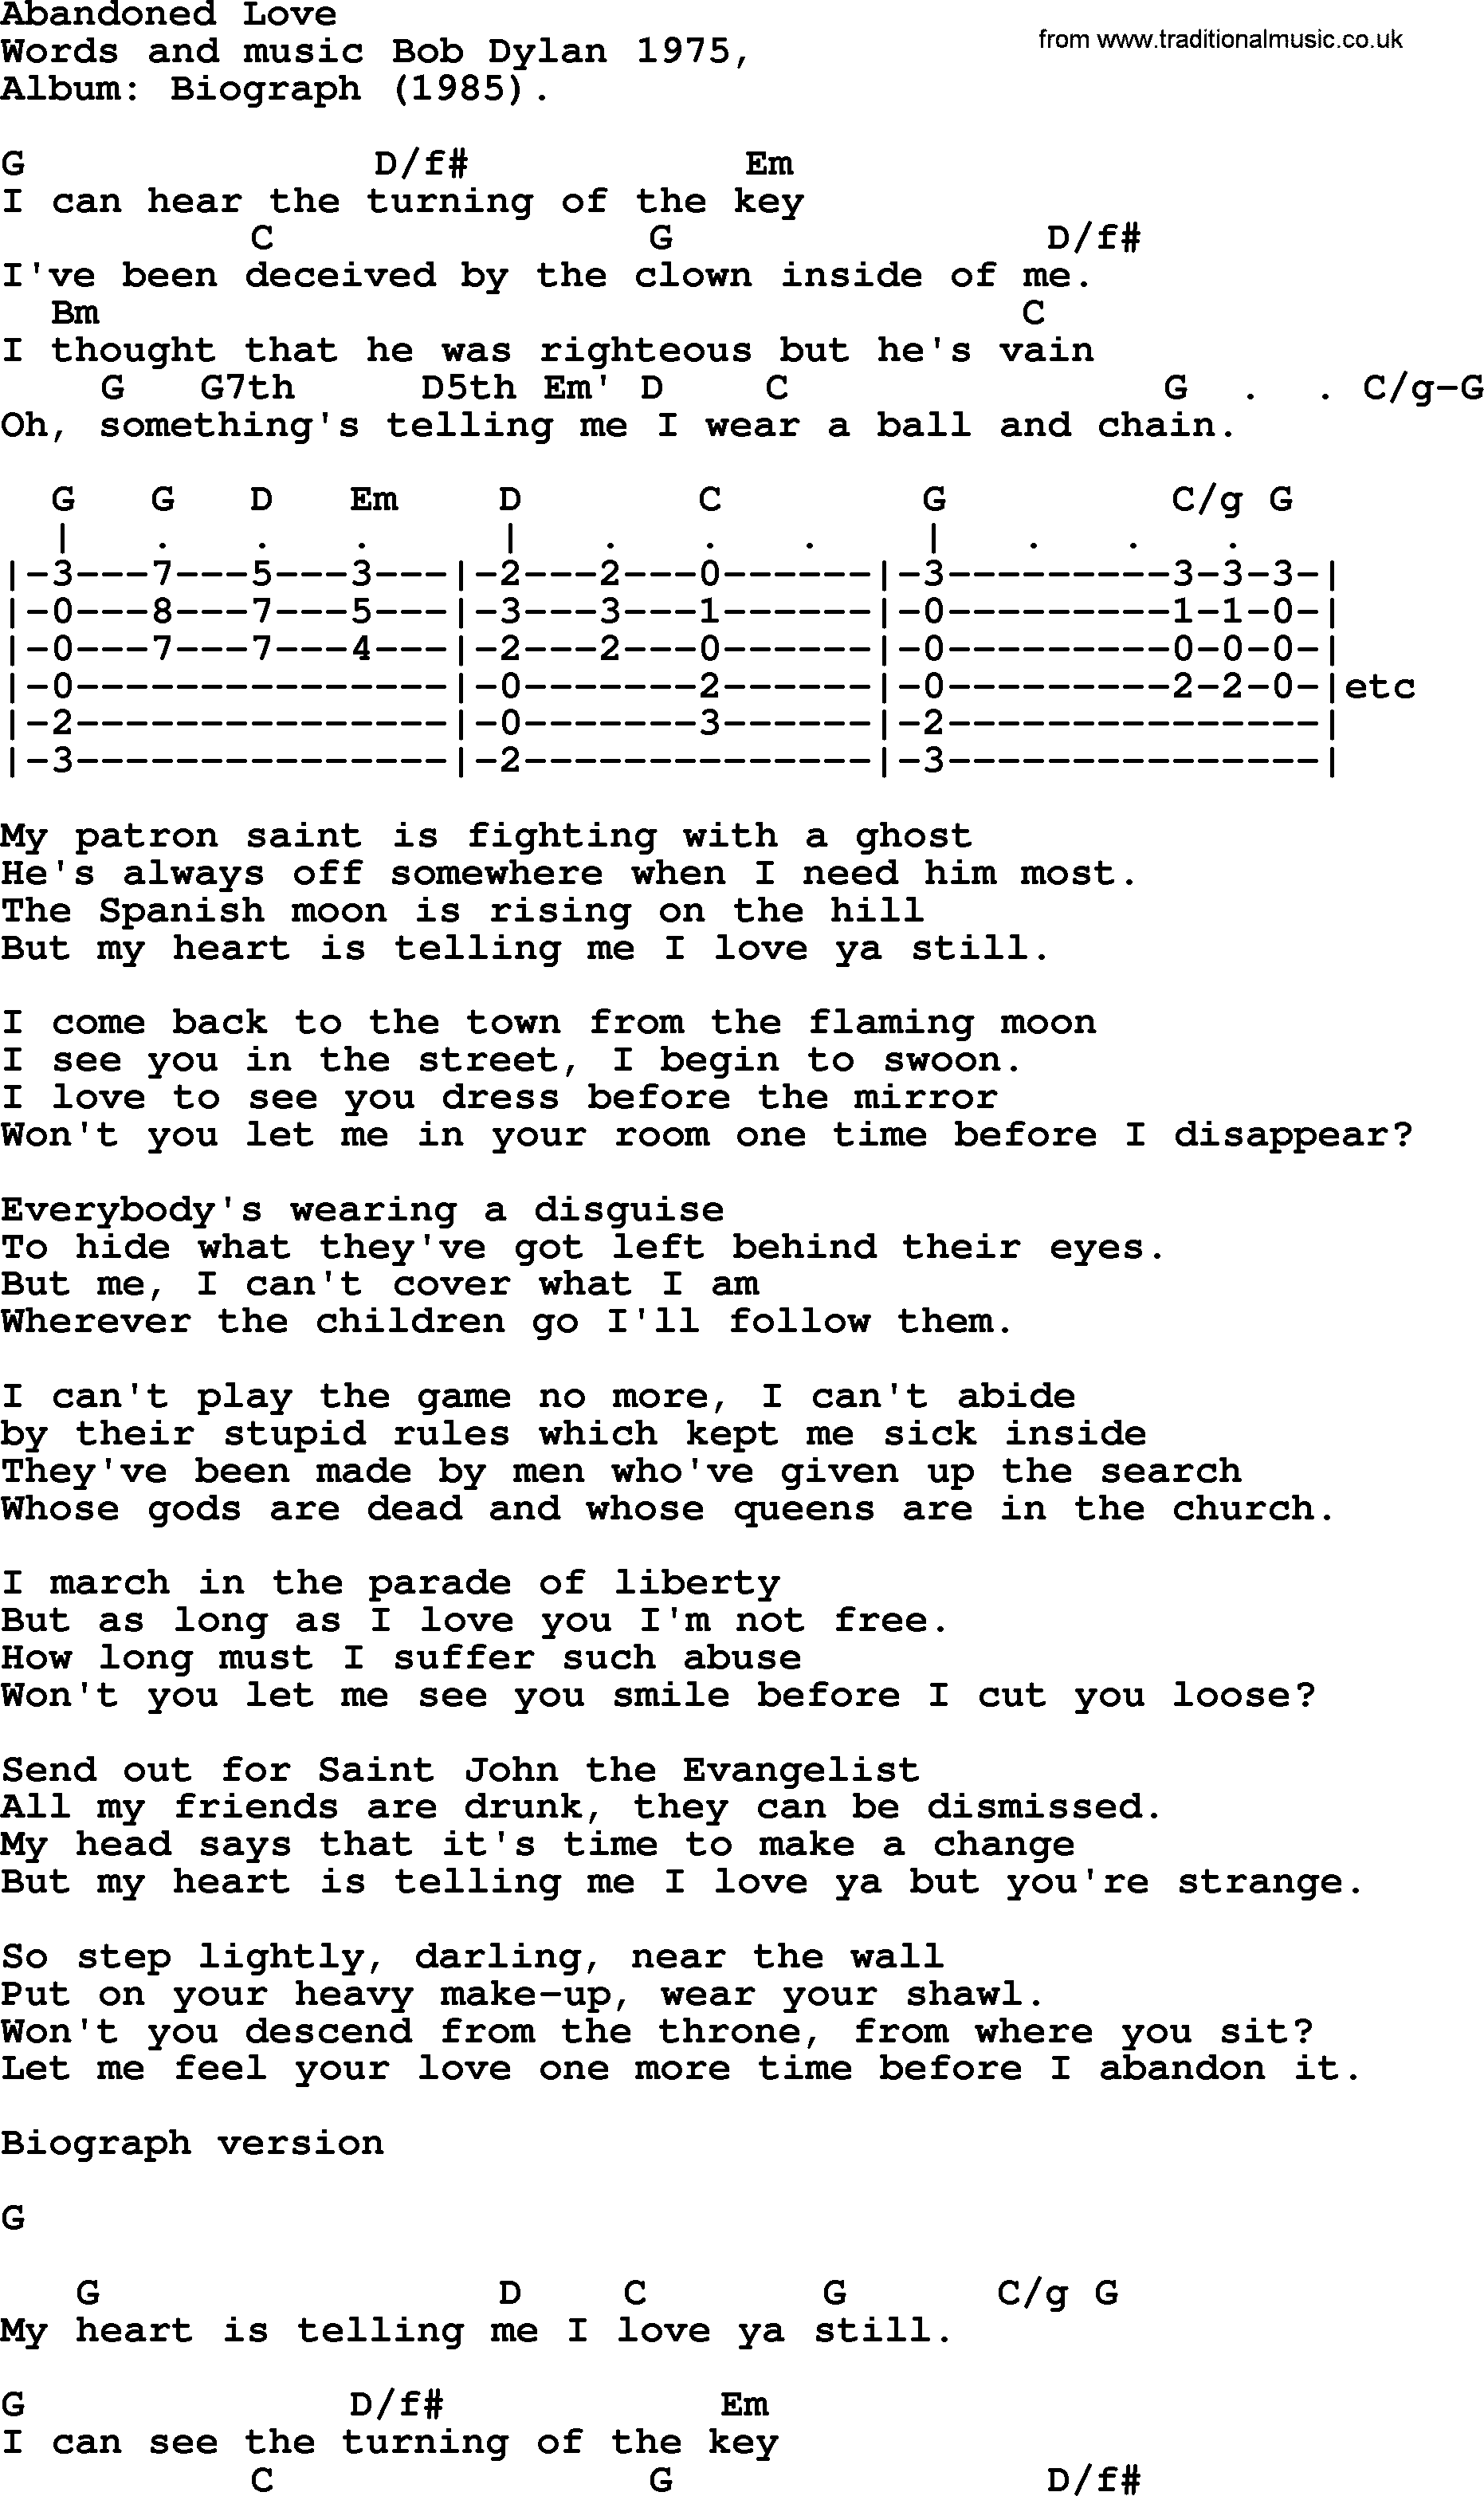 Bob Dylan song, lyrics with chords - Abandoned Love